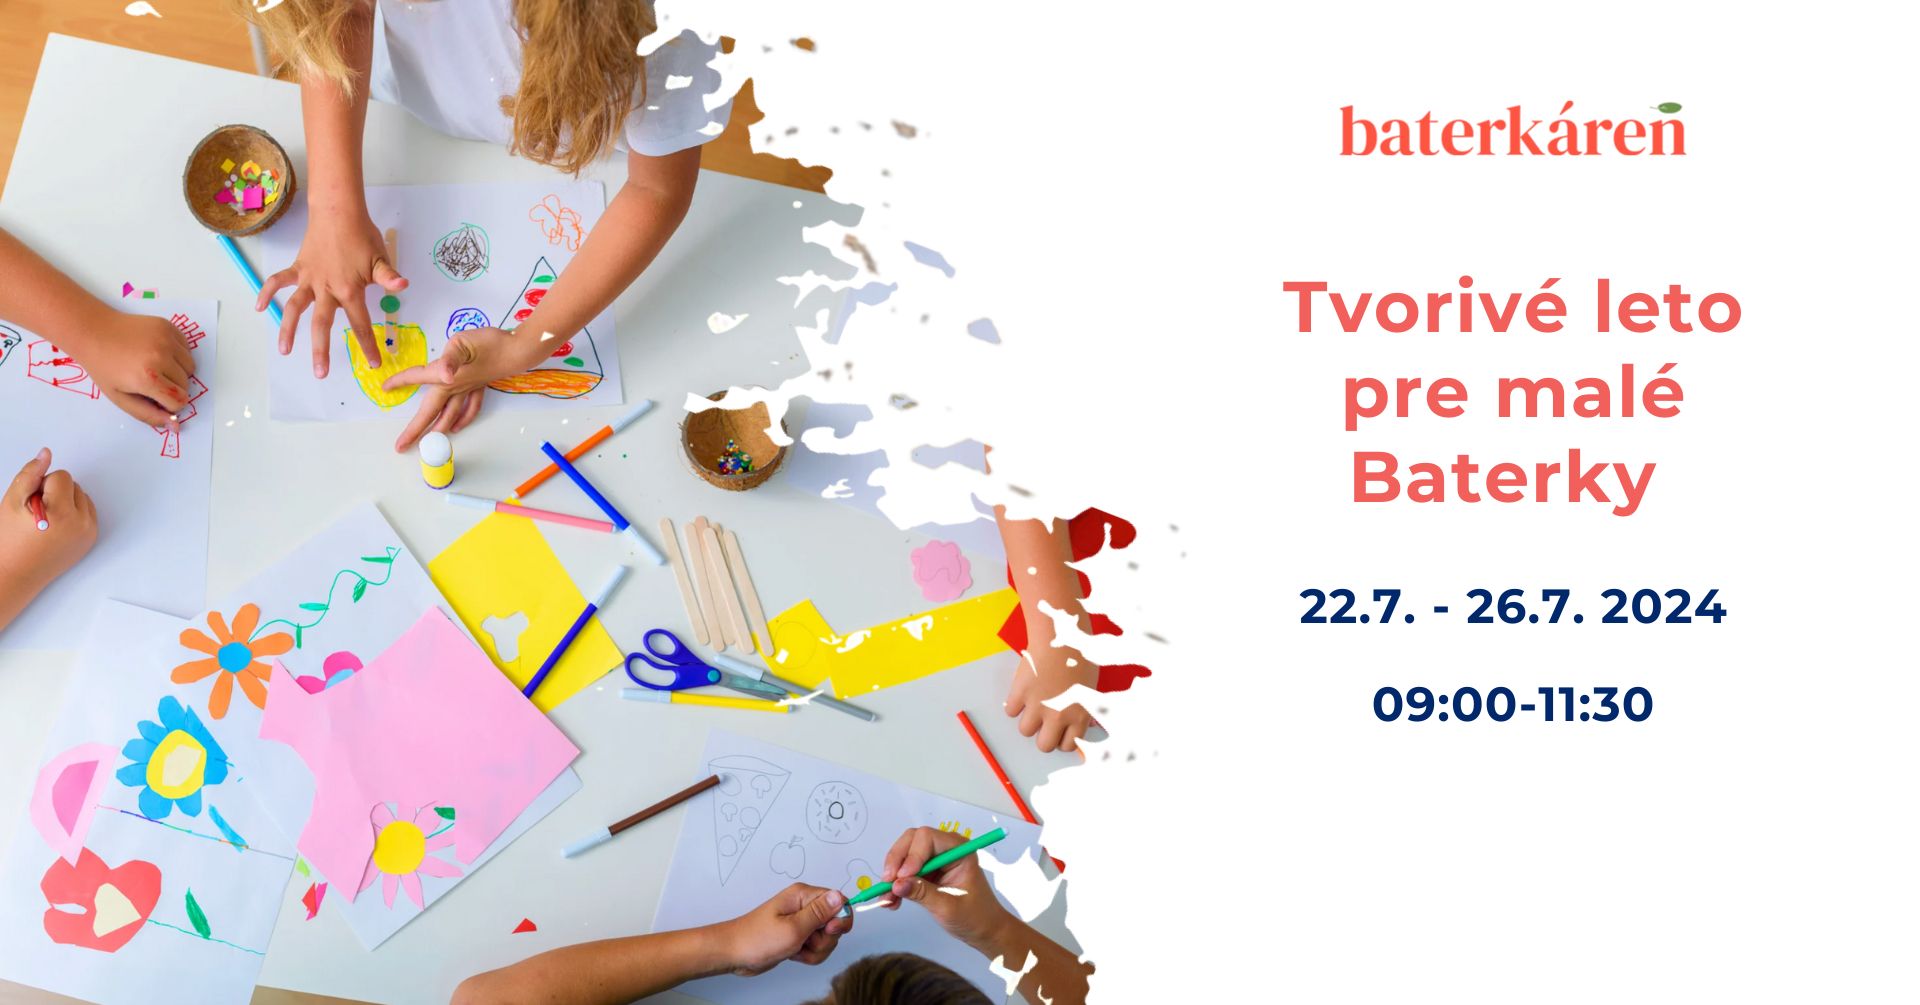 tvorive-leto-pre-male-baterky-jul-banner-event